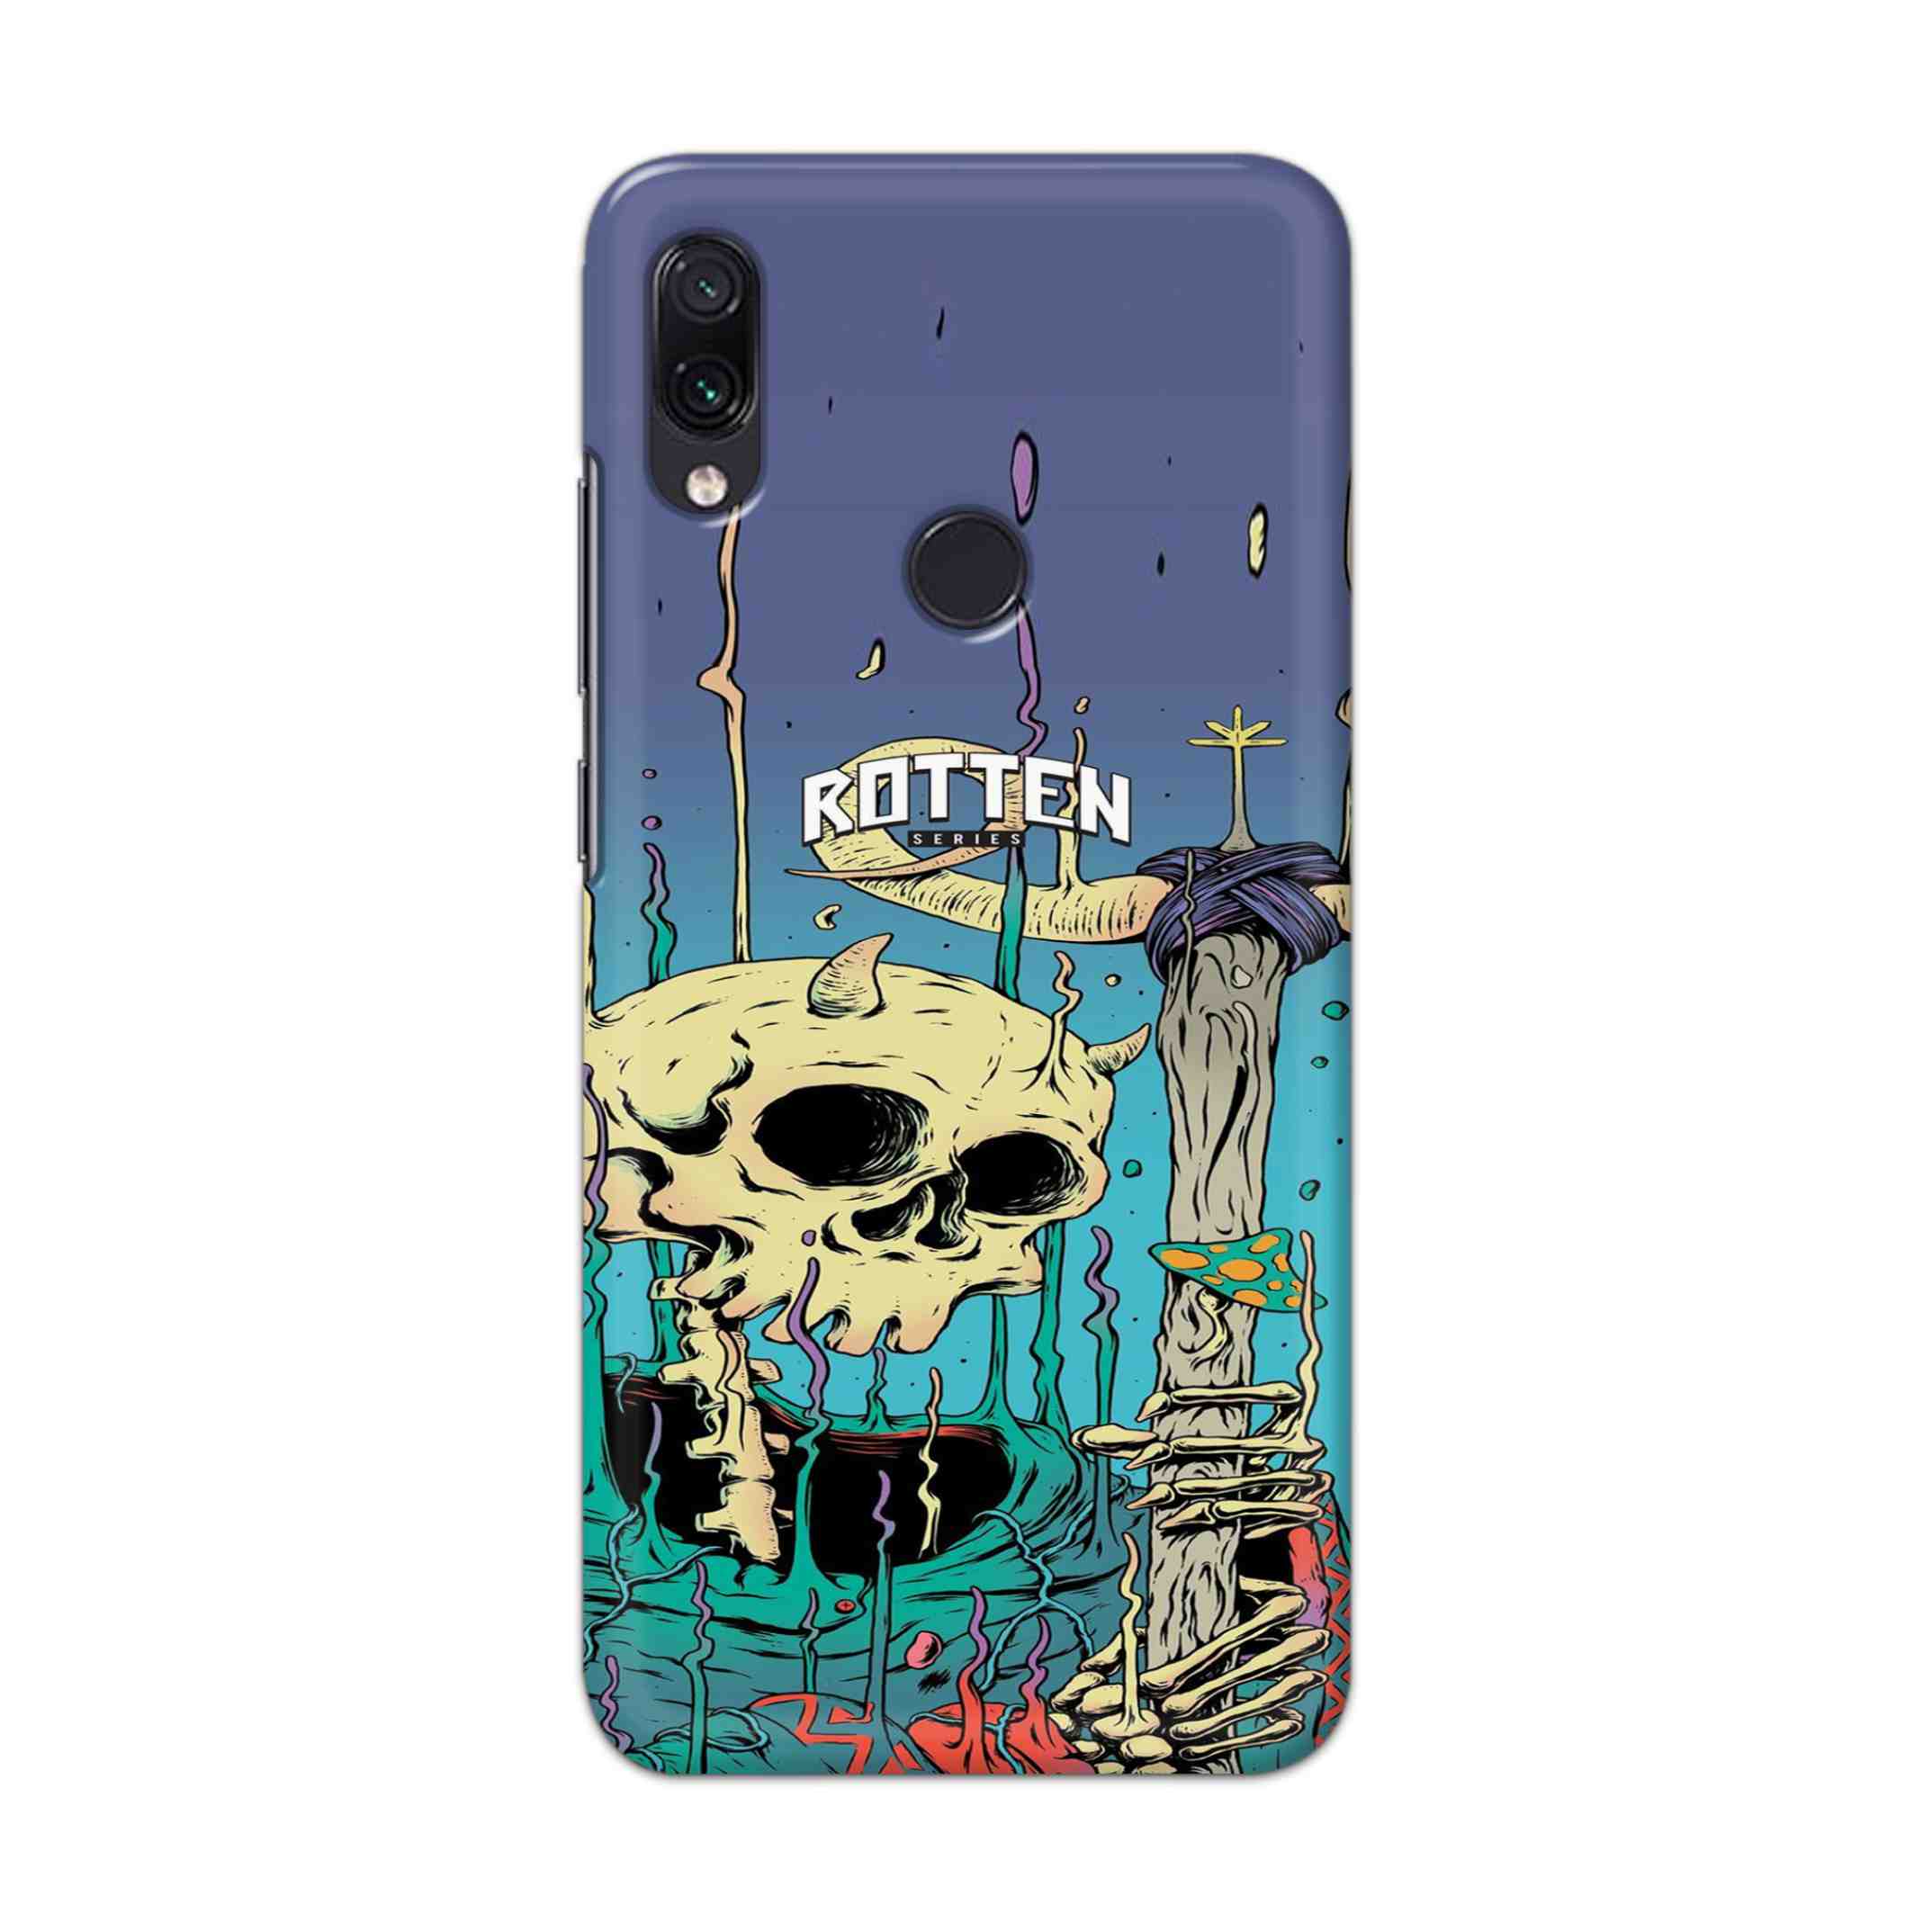 Buy Skull Hard Back Mobile Phone Case Cover For Xiaomi Redmi 7 Online